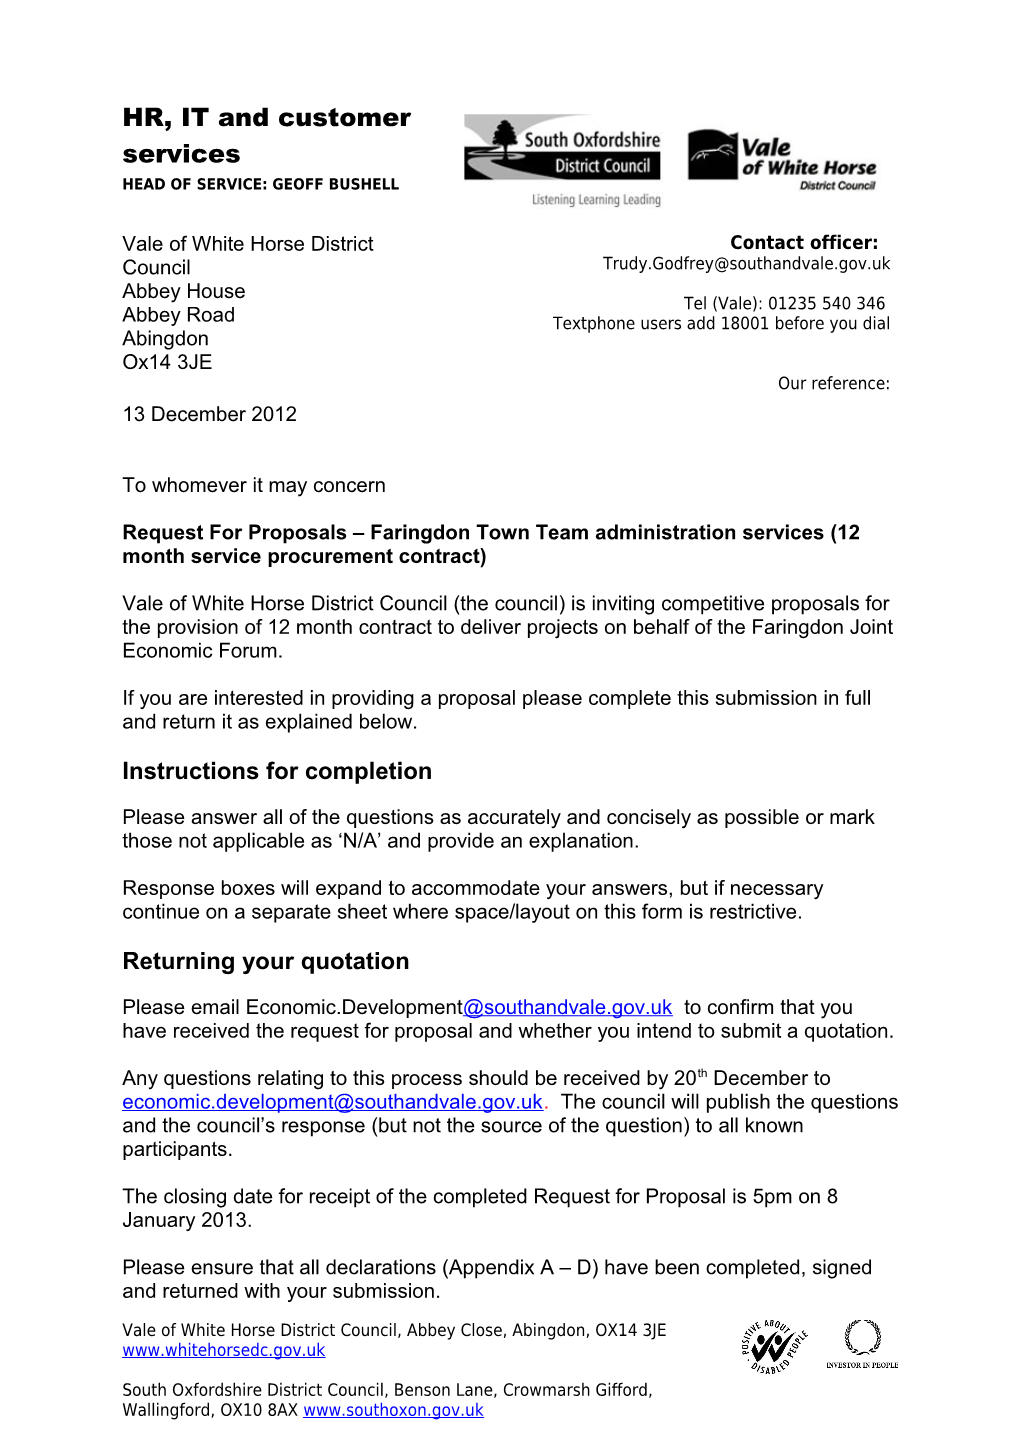 Request for Proposals Faringdon Town Team Administration Services (12 Month Service Procurement